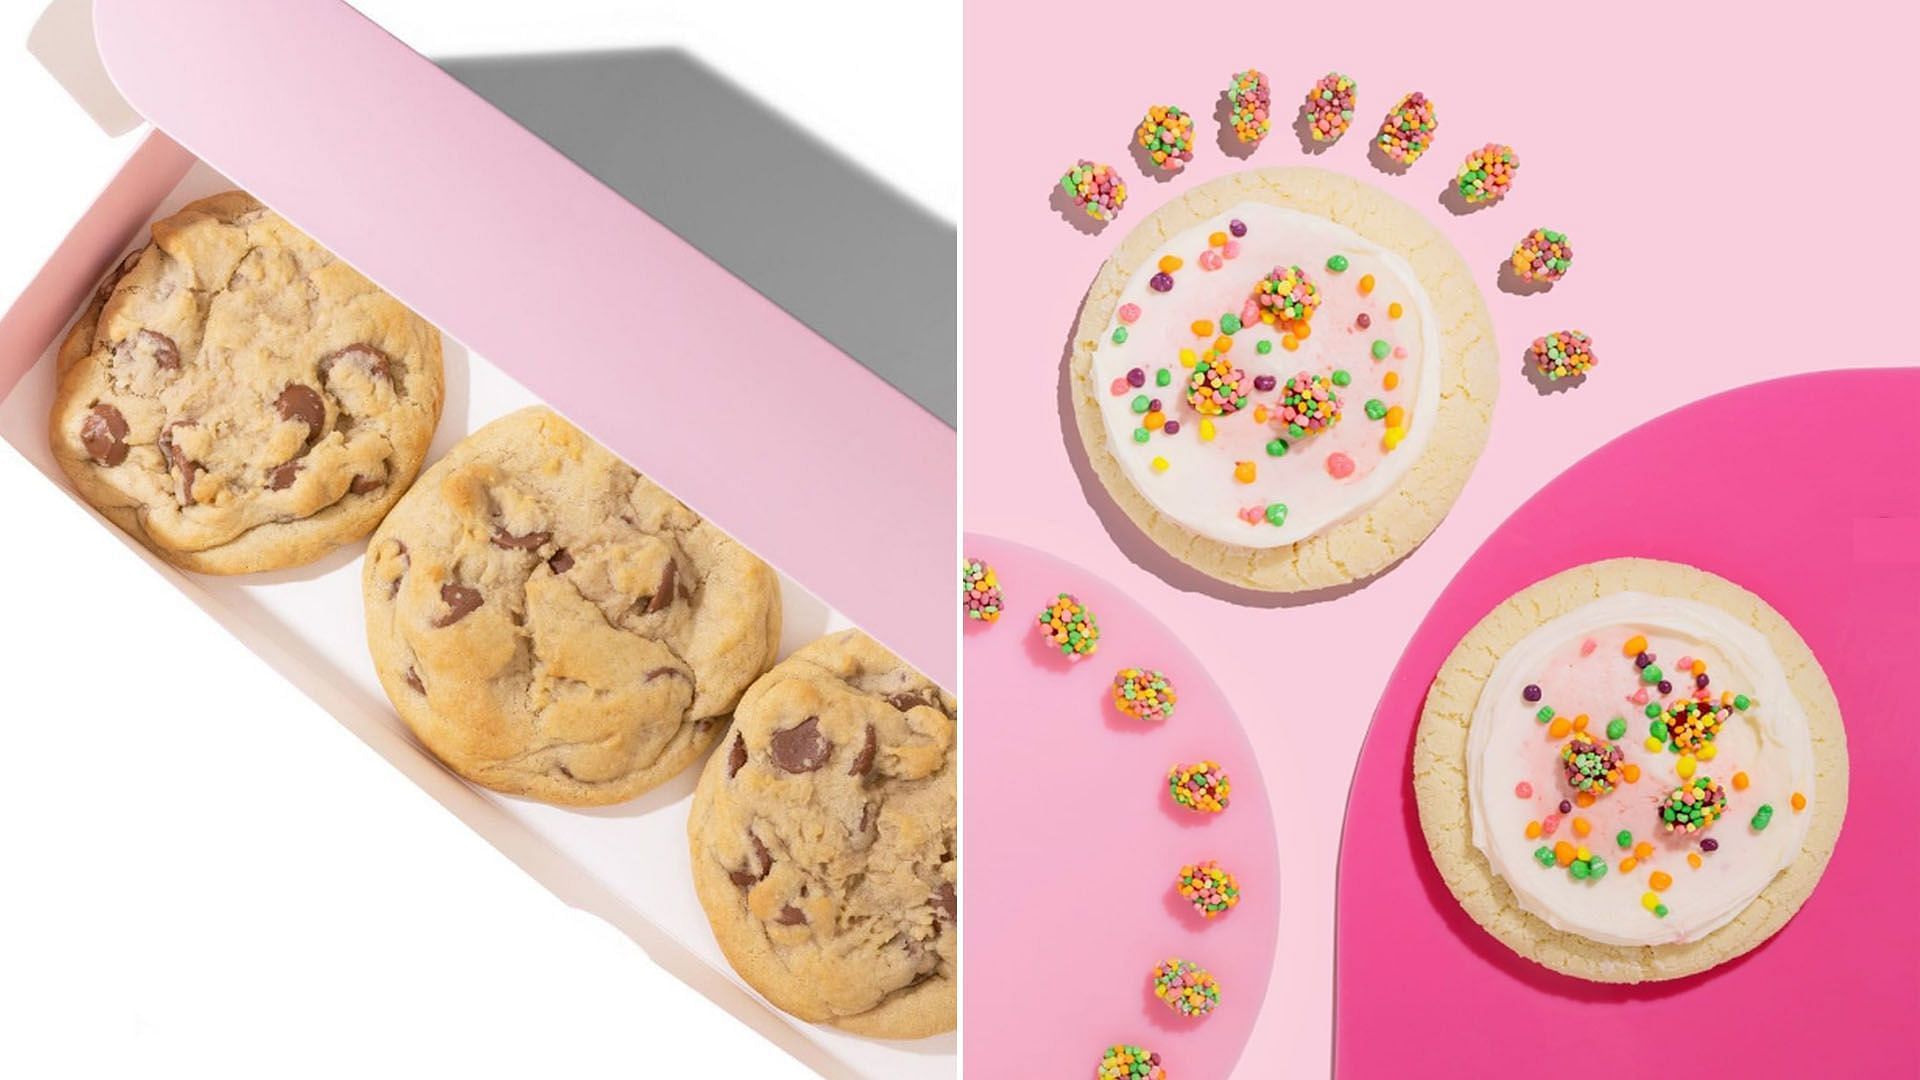 Cookie Crumbl new flavors profiles released (Image via Instagram/@crumblcookies